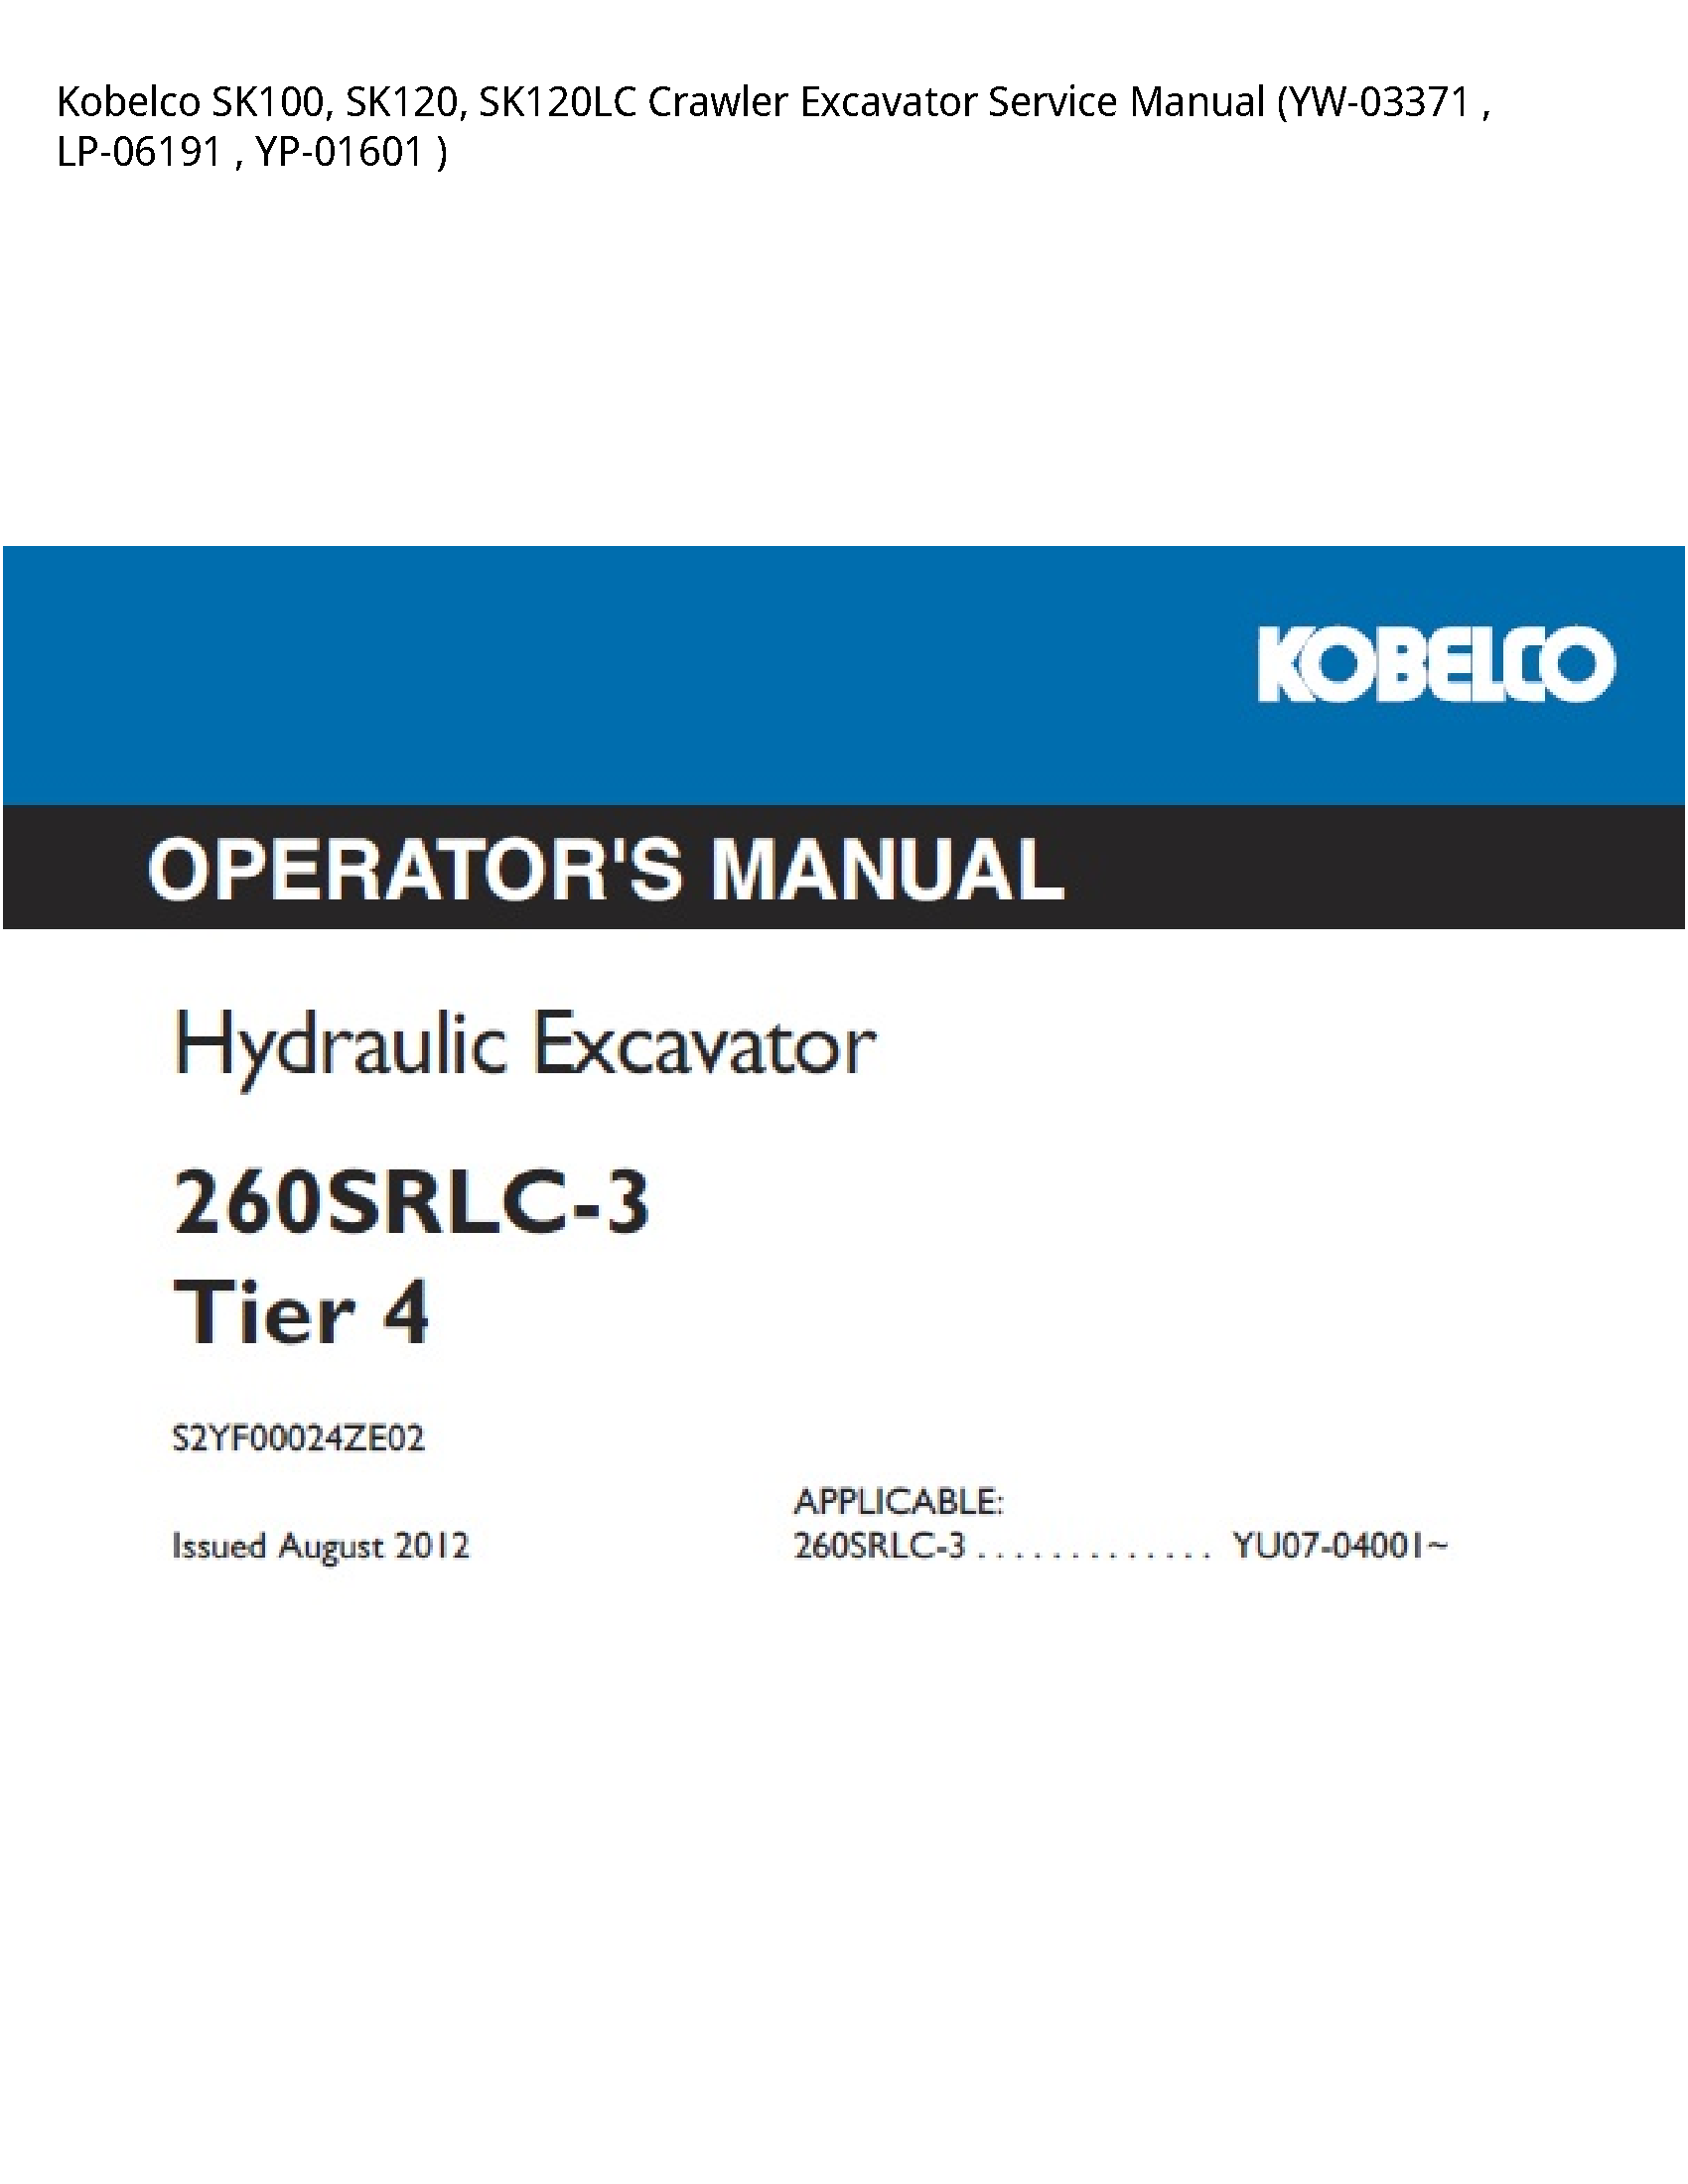 Kobelco SK100 Crawler Excavator Service manual